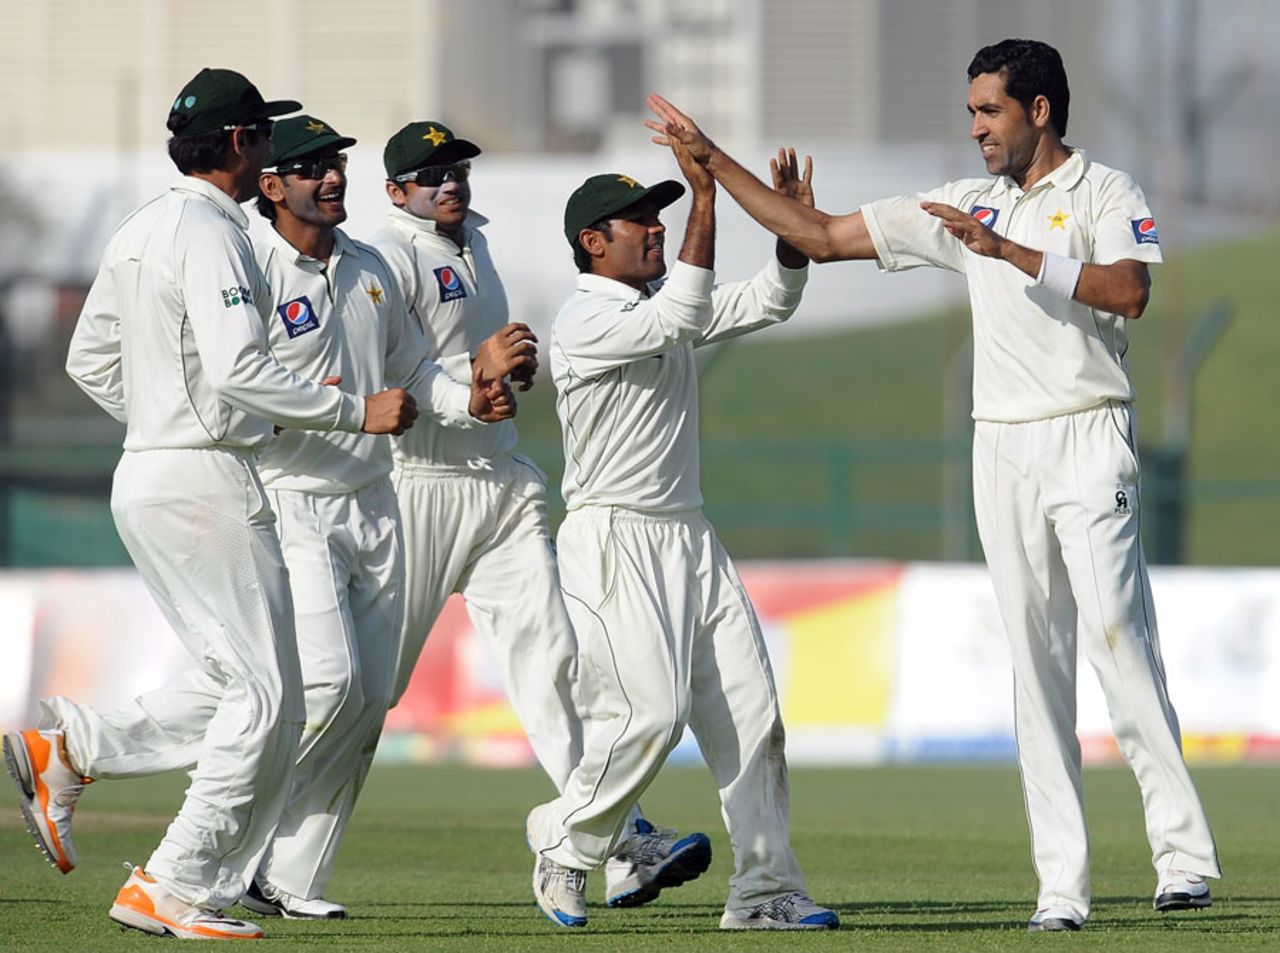 Pakistan get together after Umar Gul's dismissal of Angelo Mathews, Pakistan v Sri Lanka, 1st Test, Abu Dhabi, 4th day, October 21, 2011